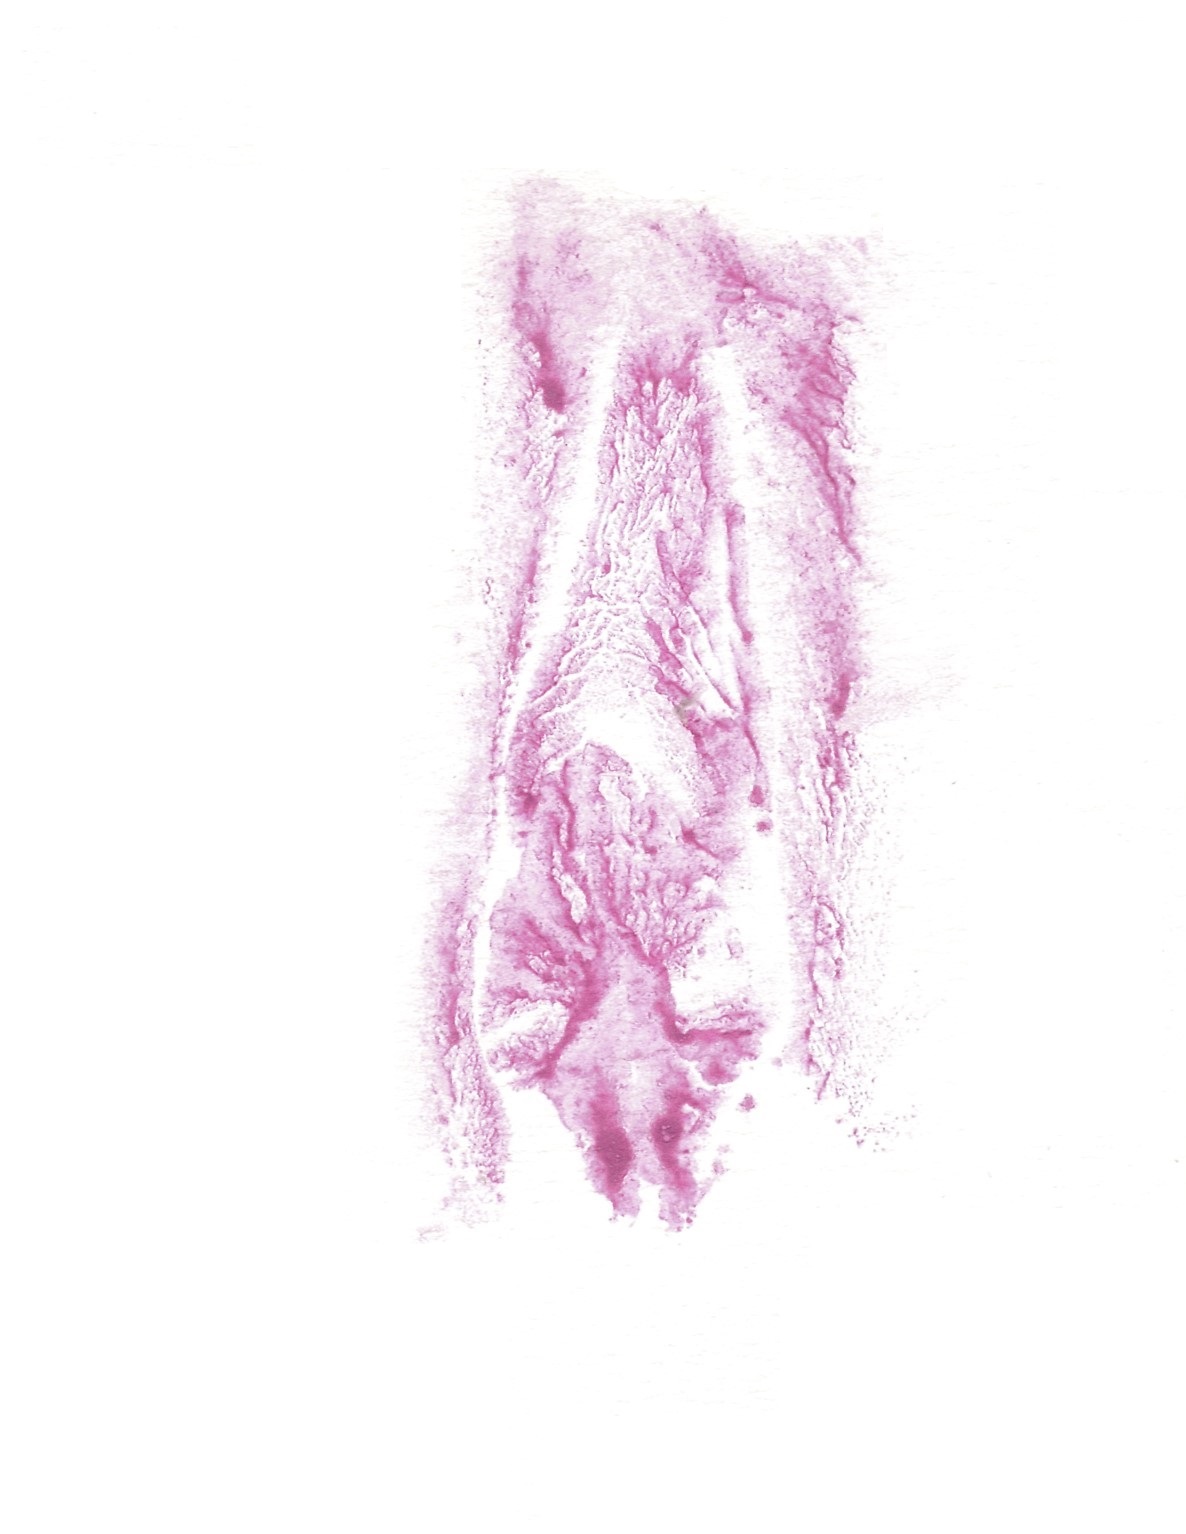 red print of vulva